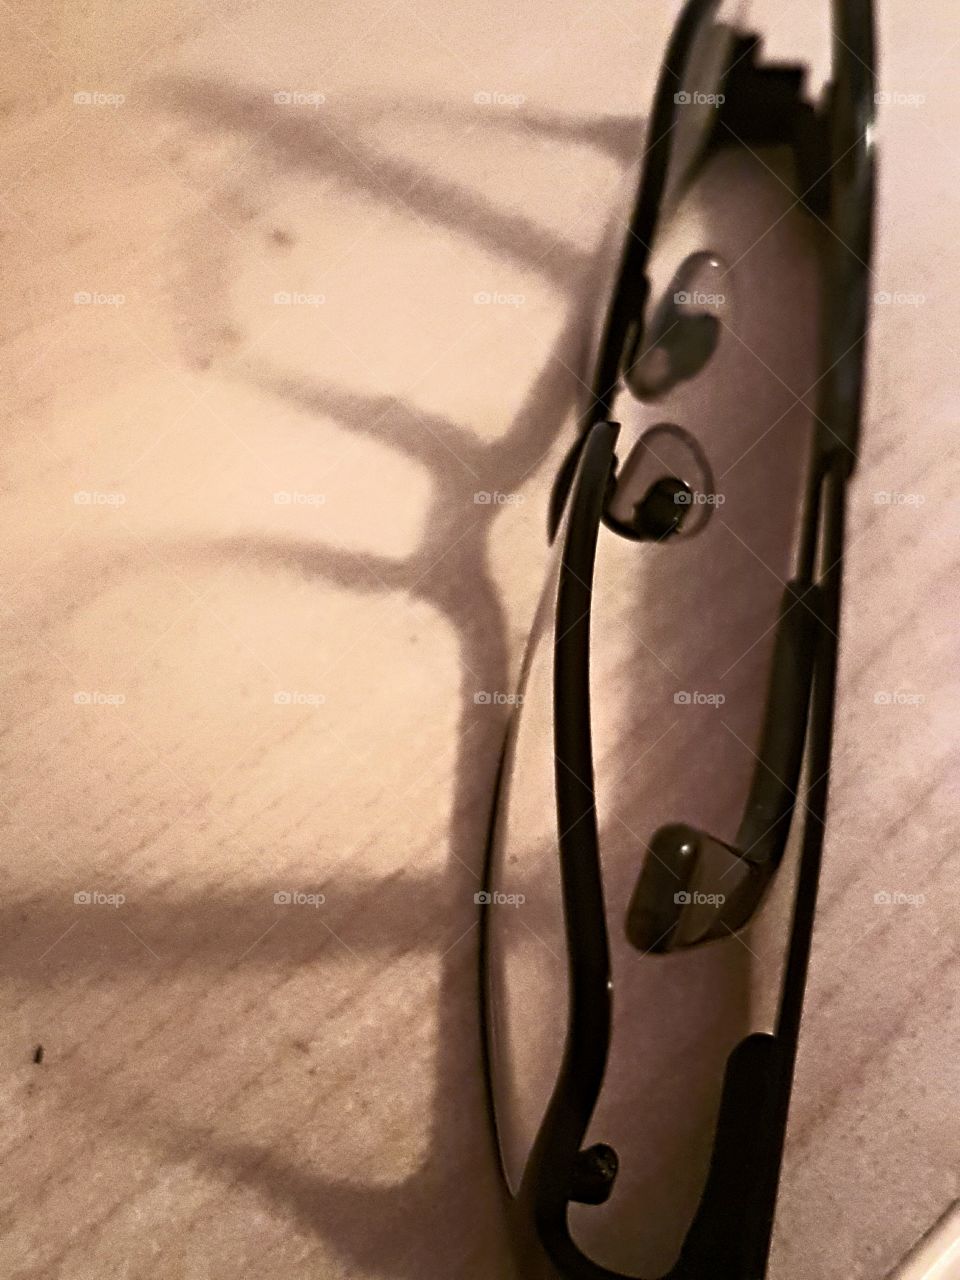 Glasses reflection